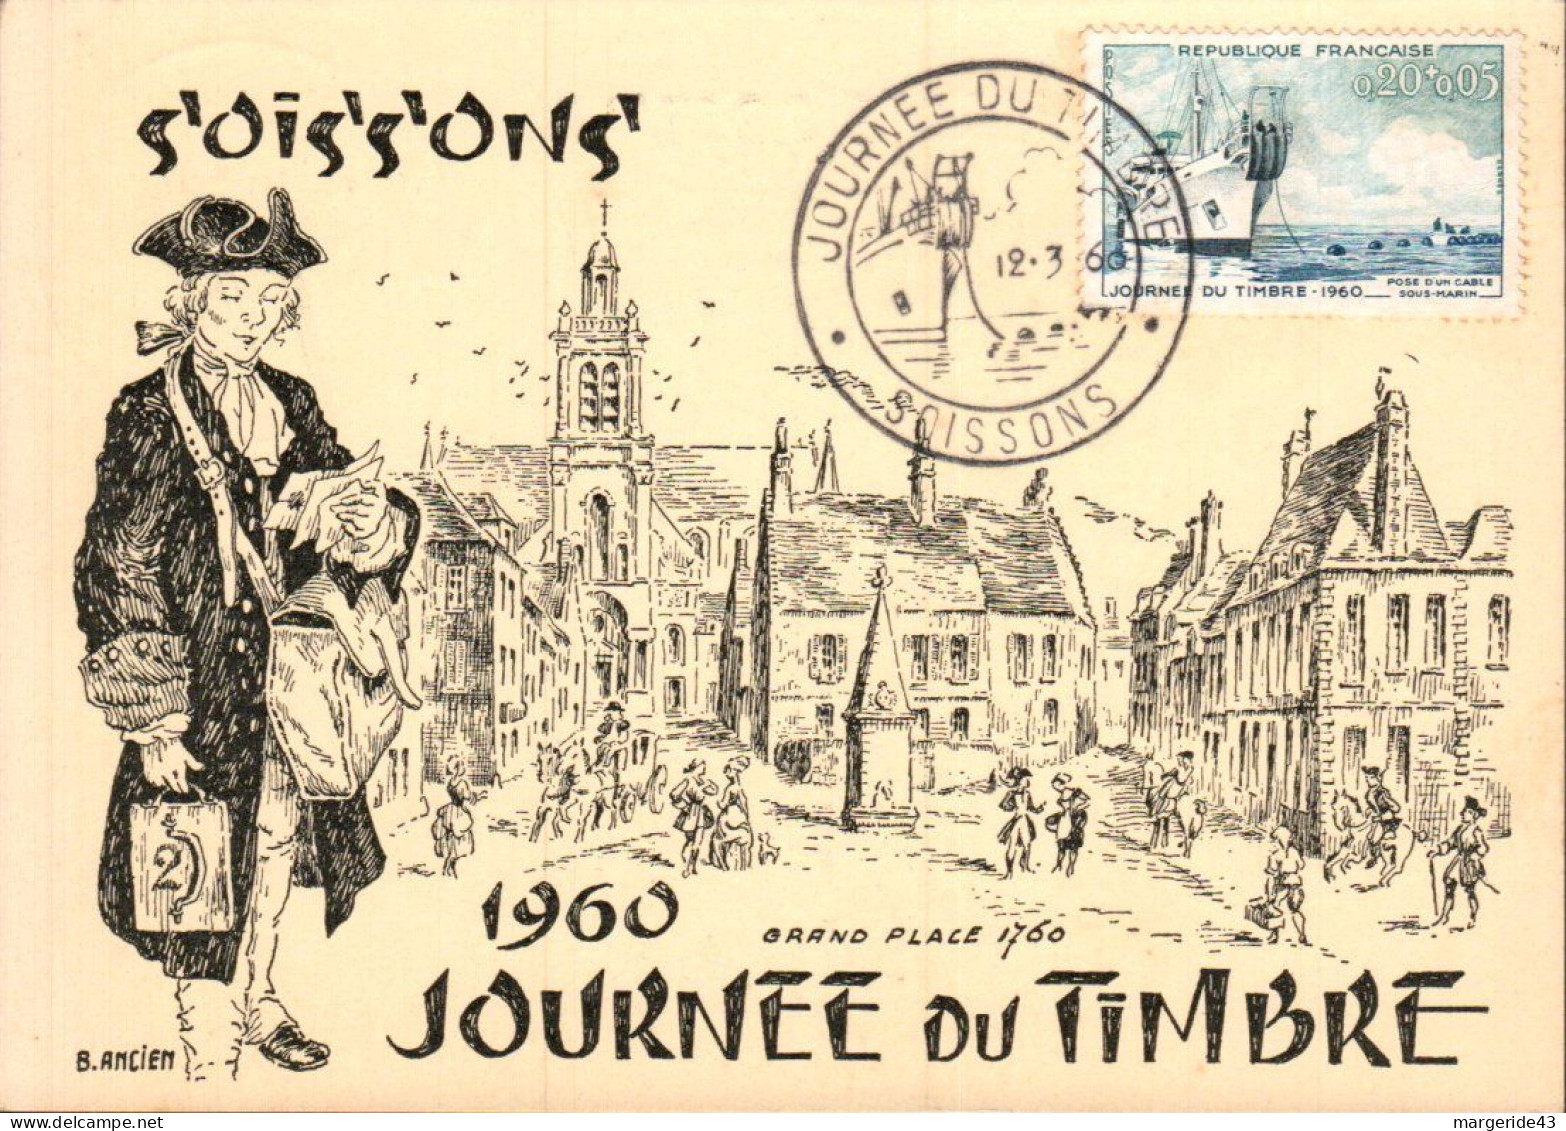 JOURNEE DU TIMBRE 1960 SOISSONS - Commemorative Postmarks